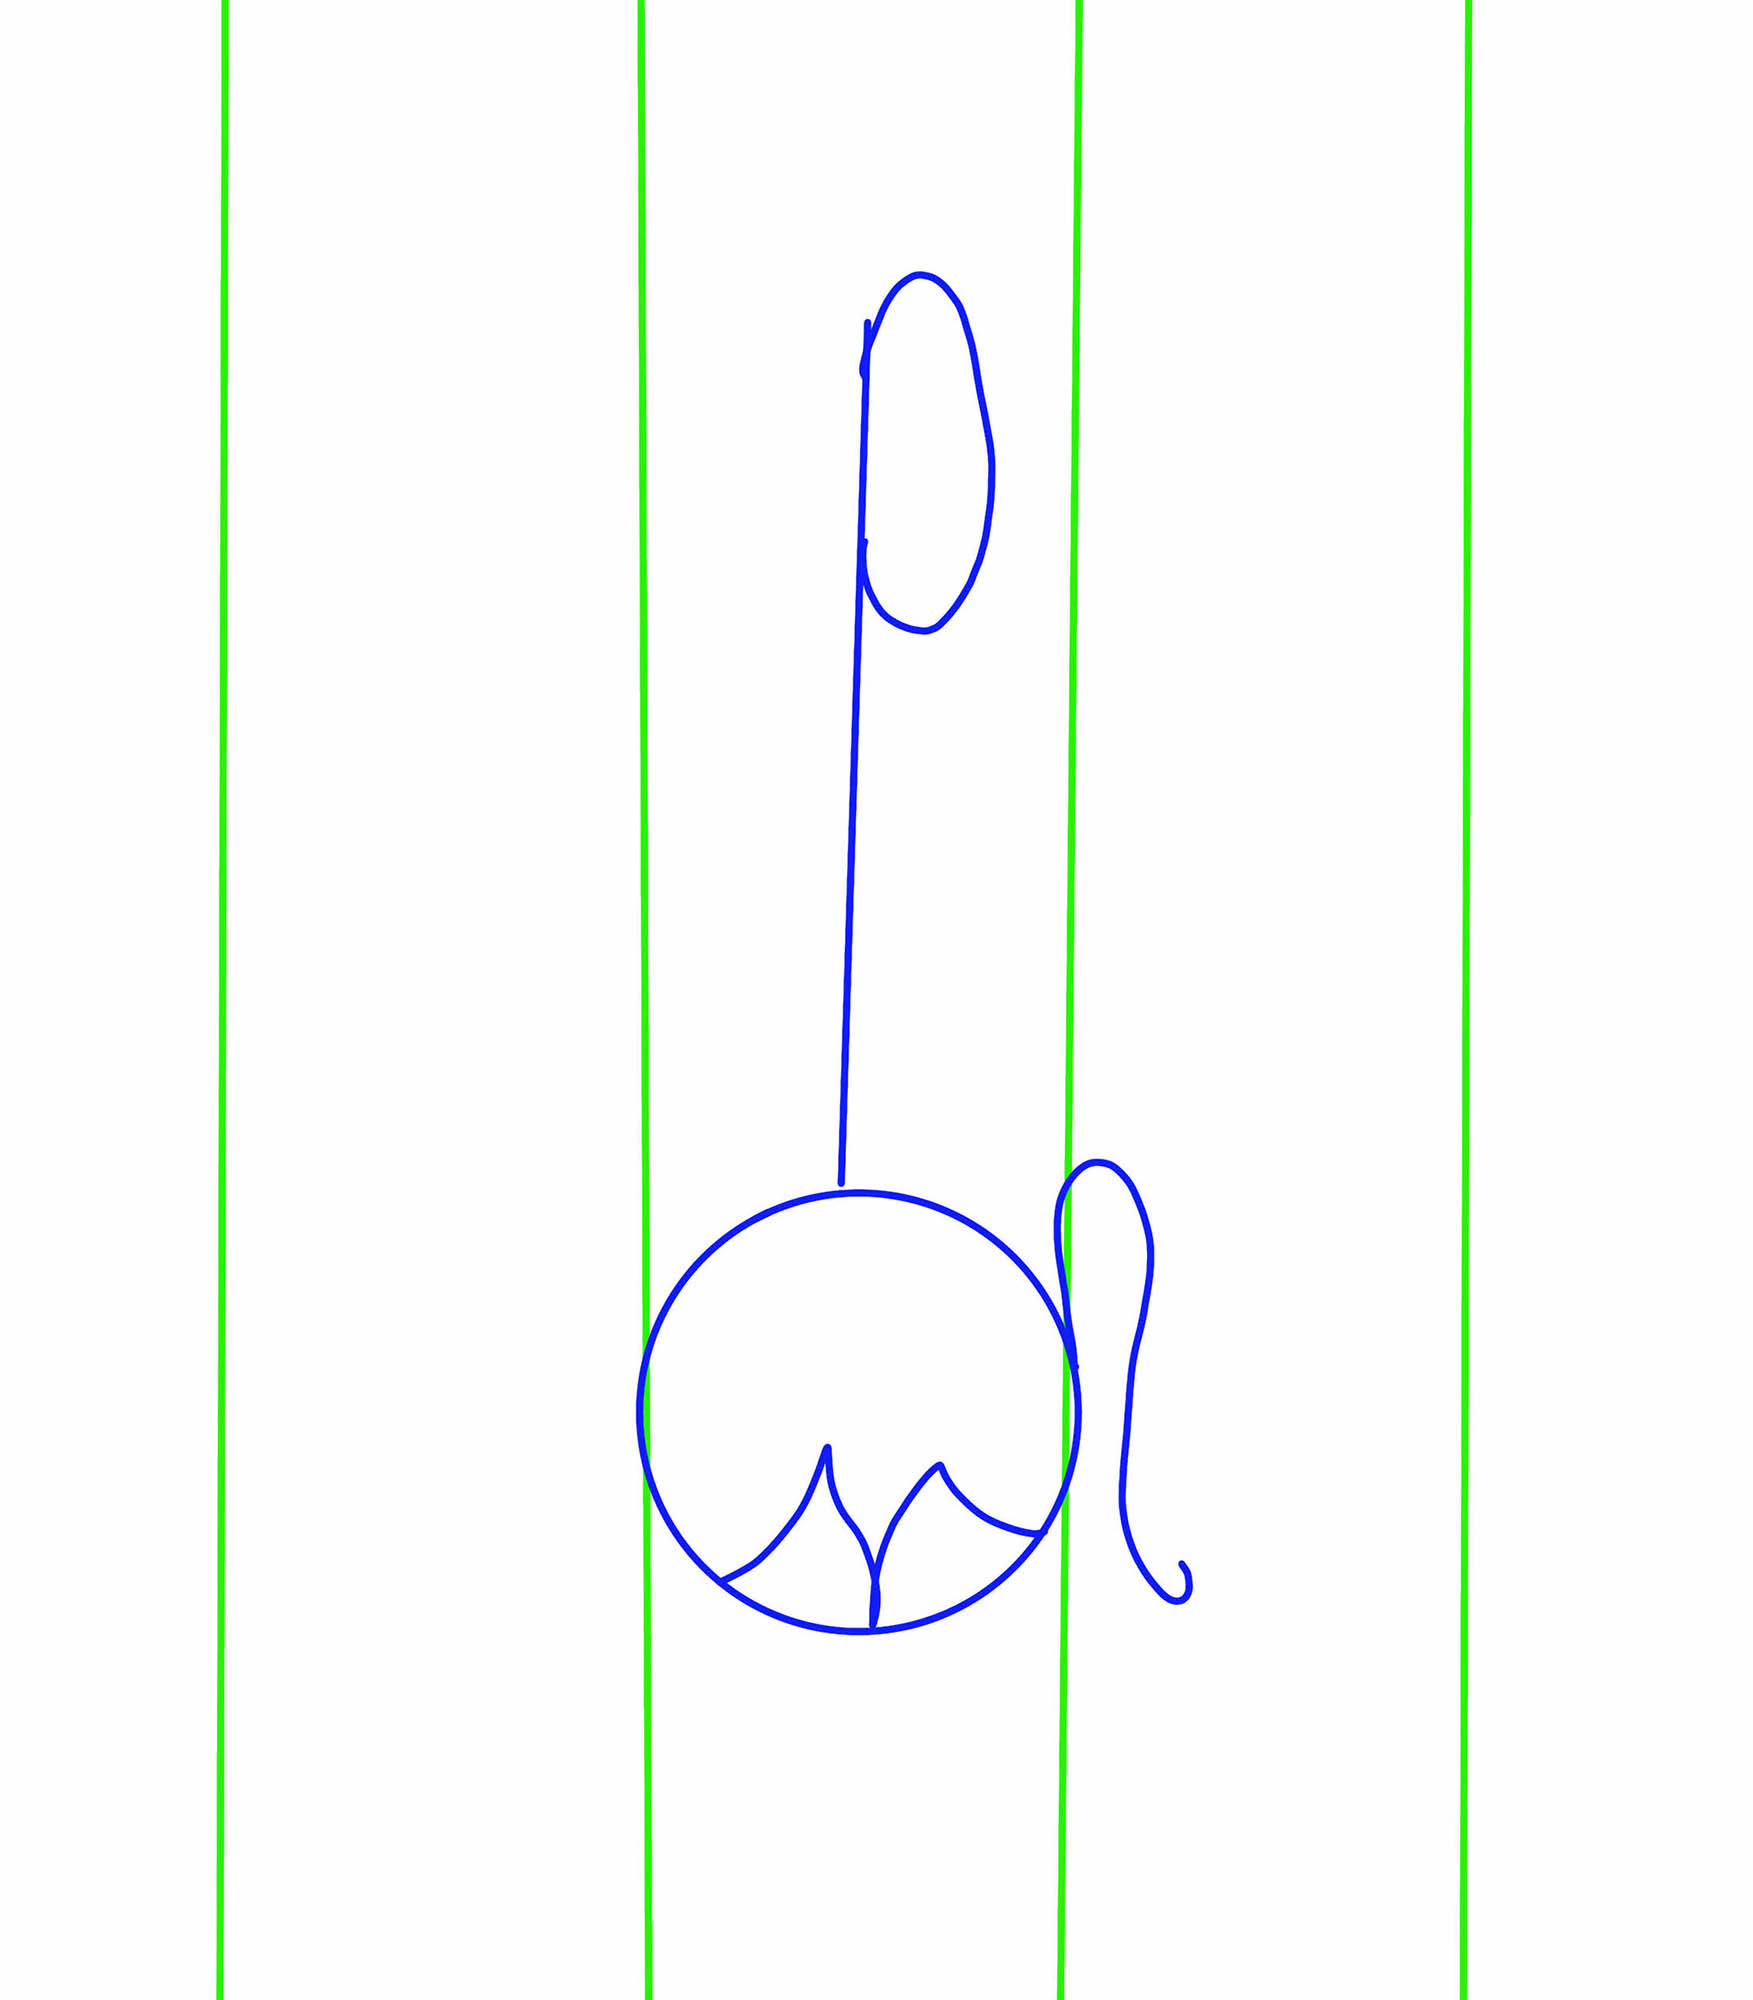 Arundel ff. 98-103 - Line drawing